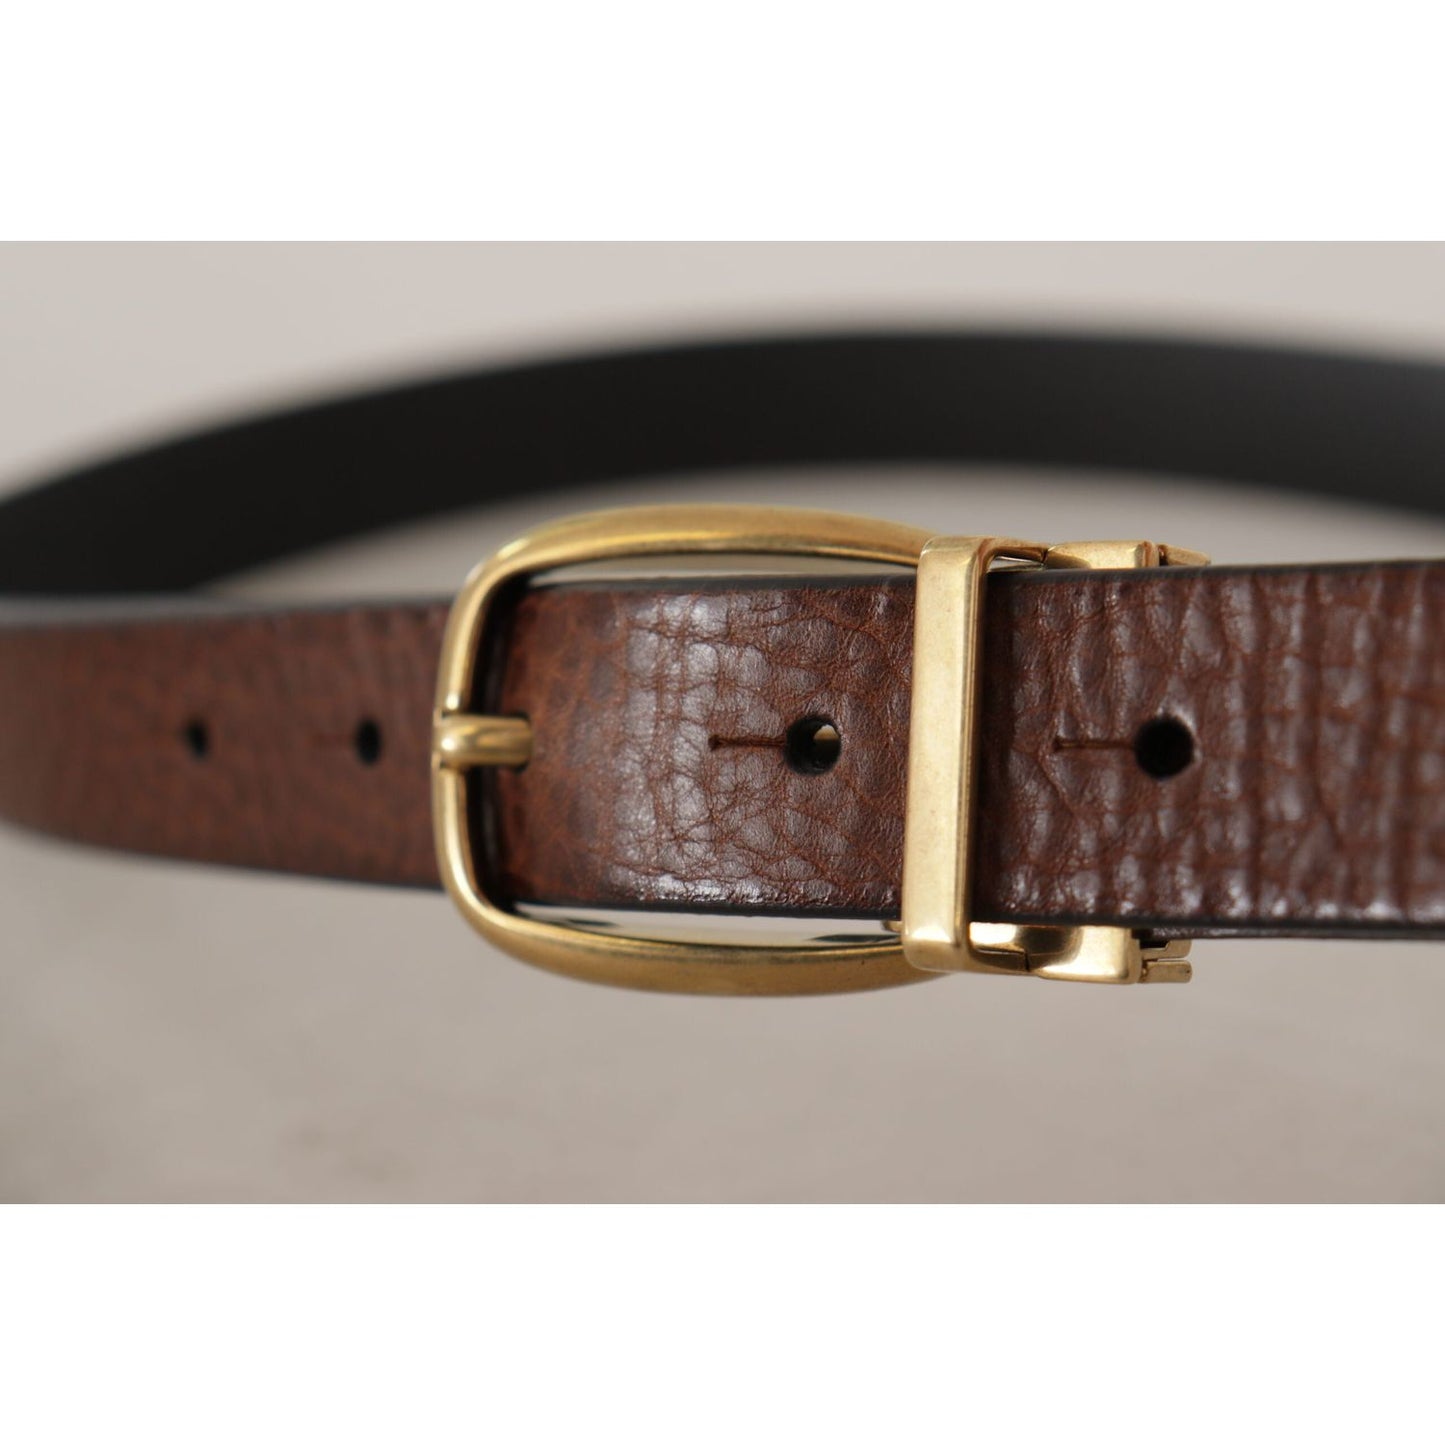 Elegant Brown Leather Belt with Logo Buckle